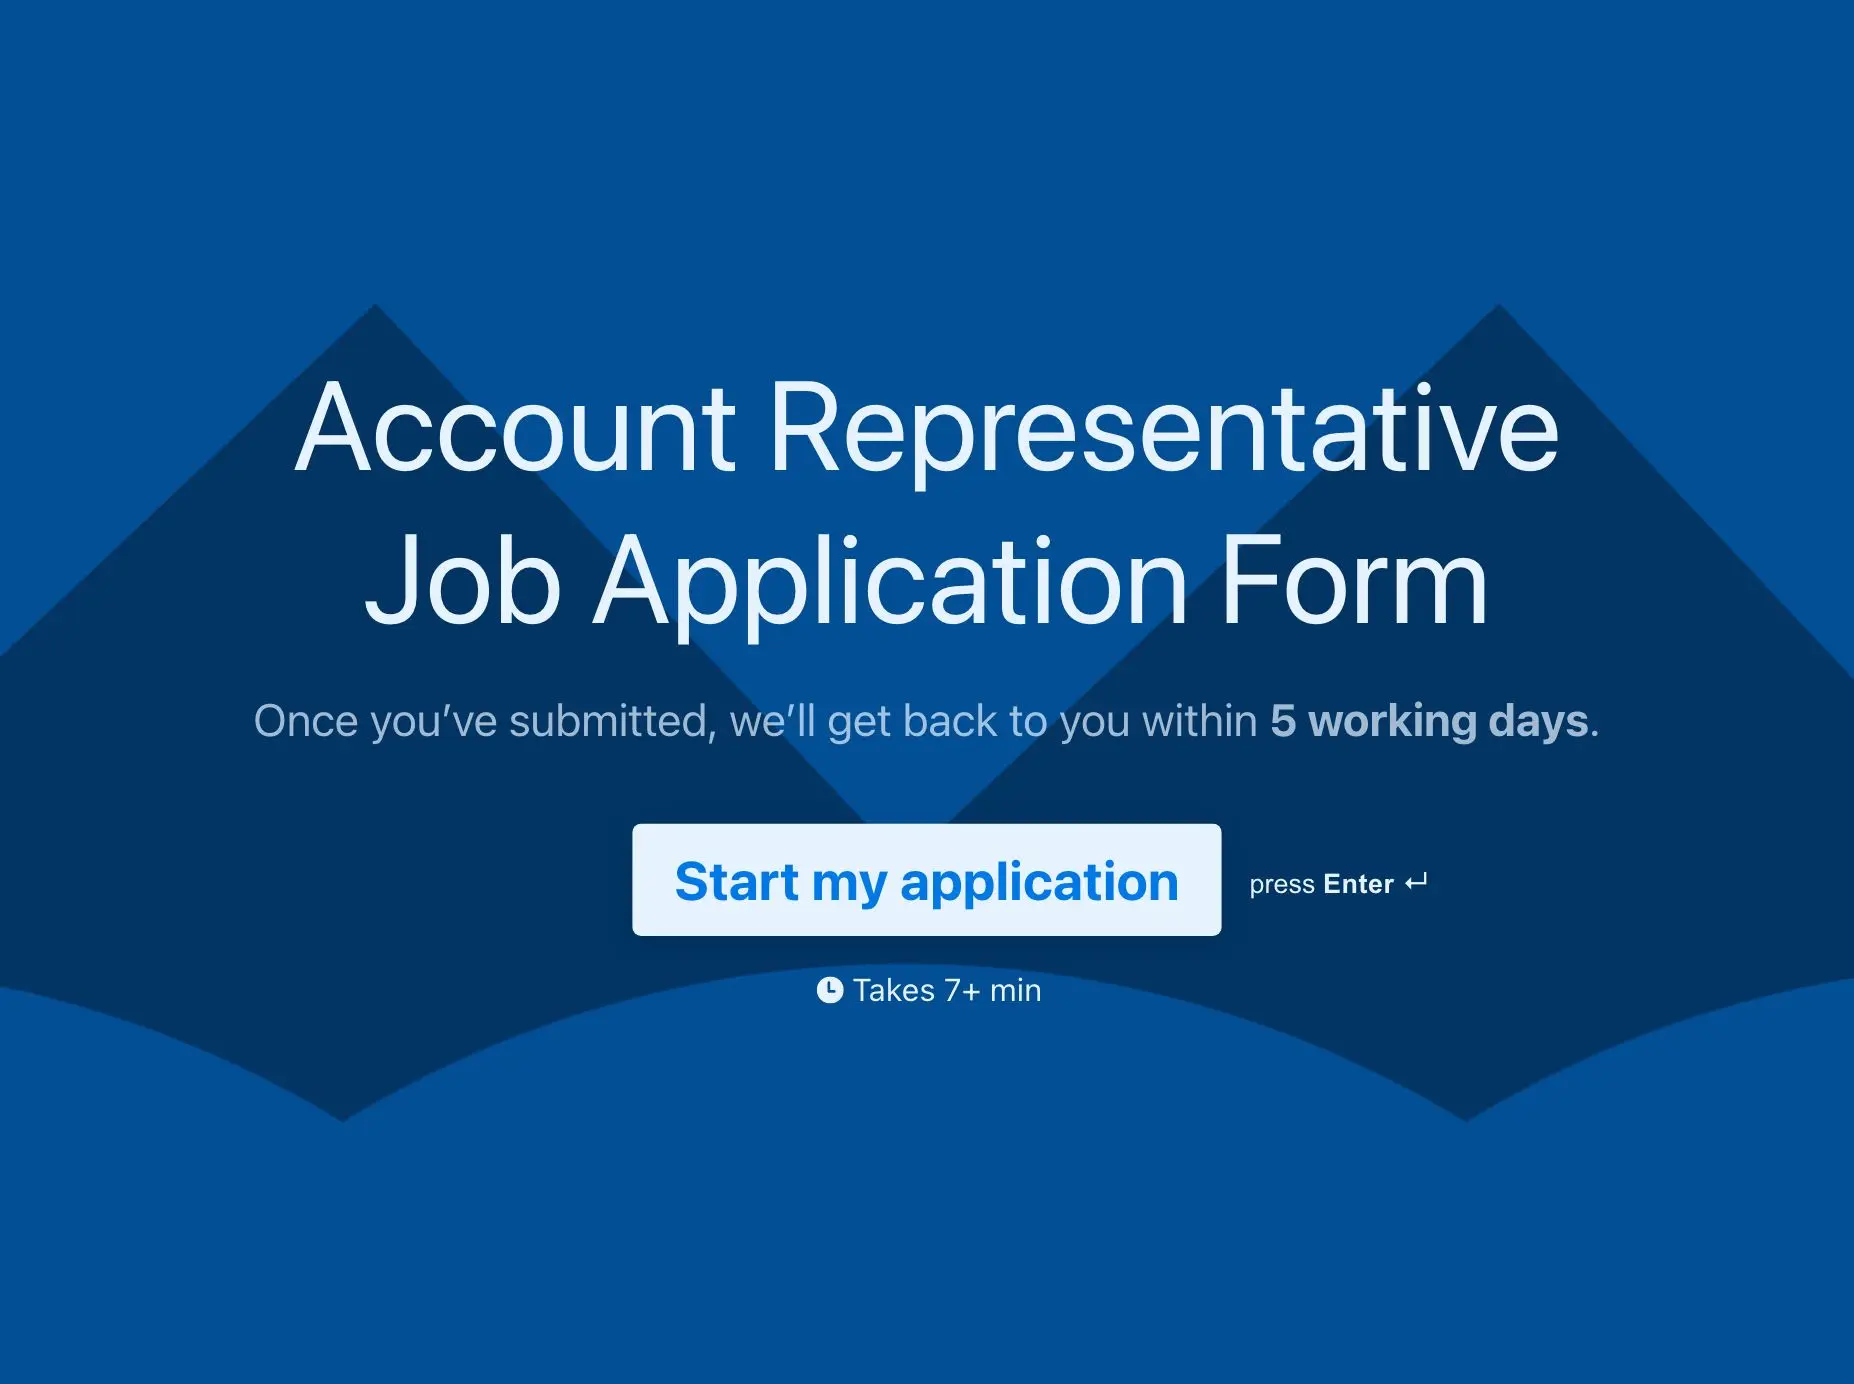 Account Representative Job Application Form Template Hero